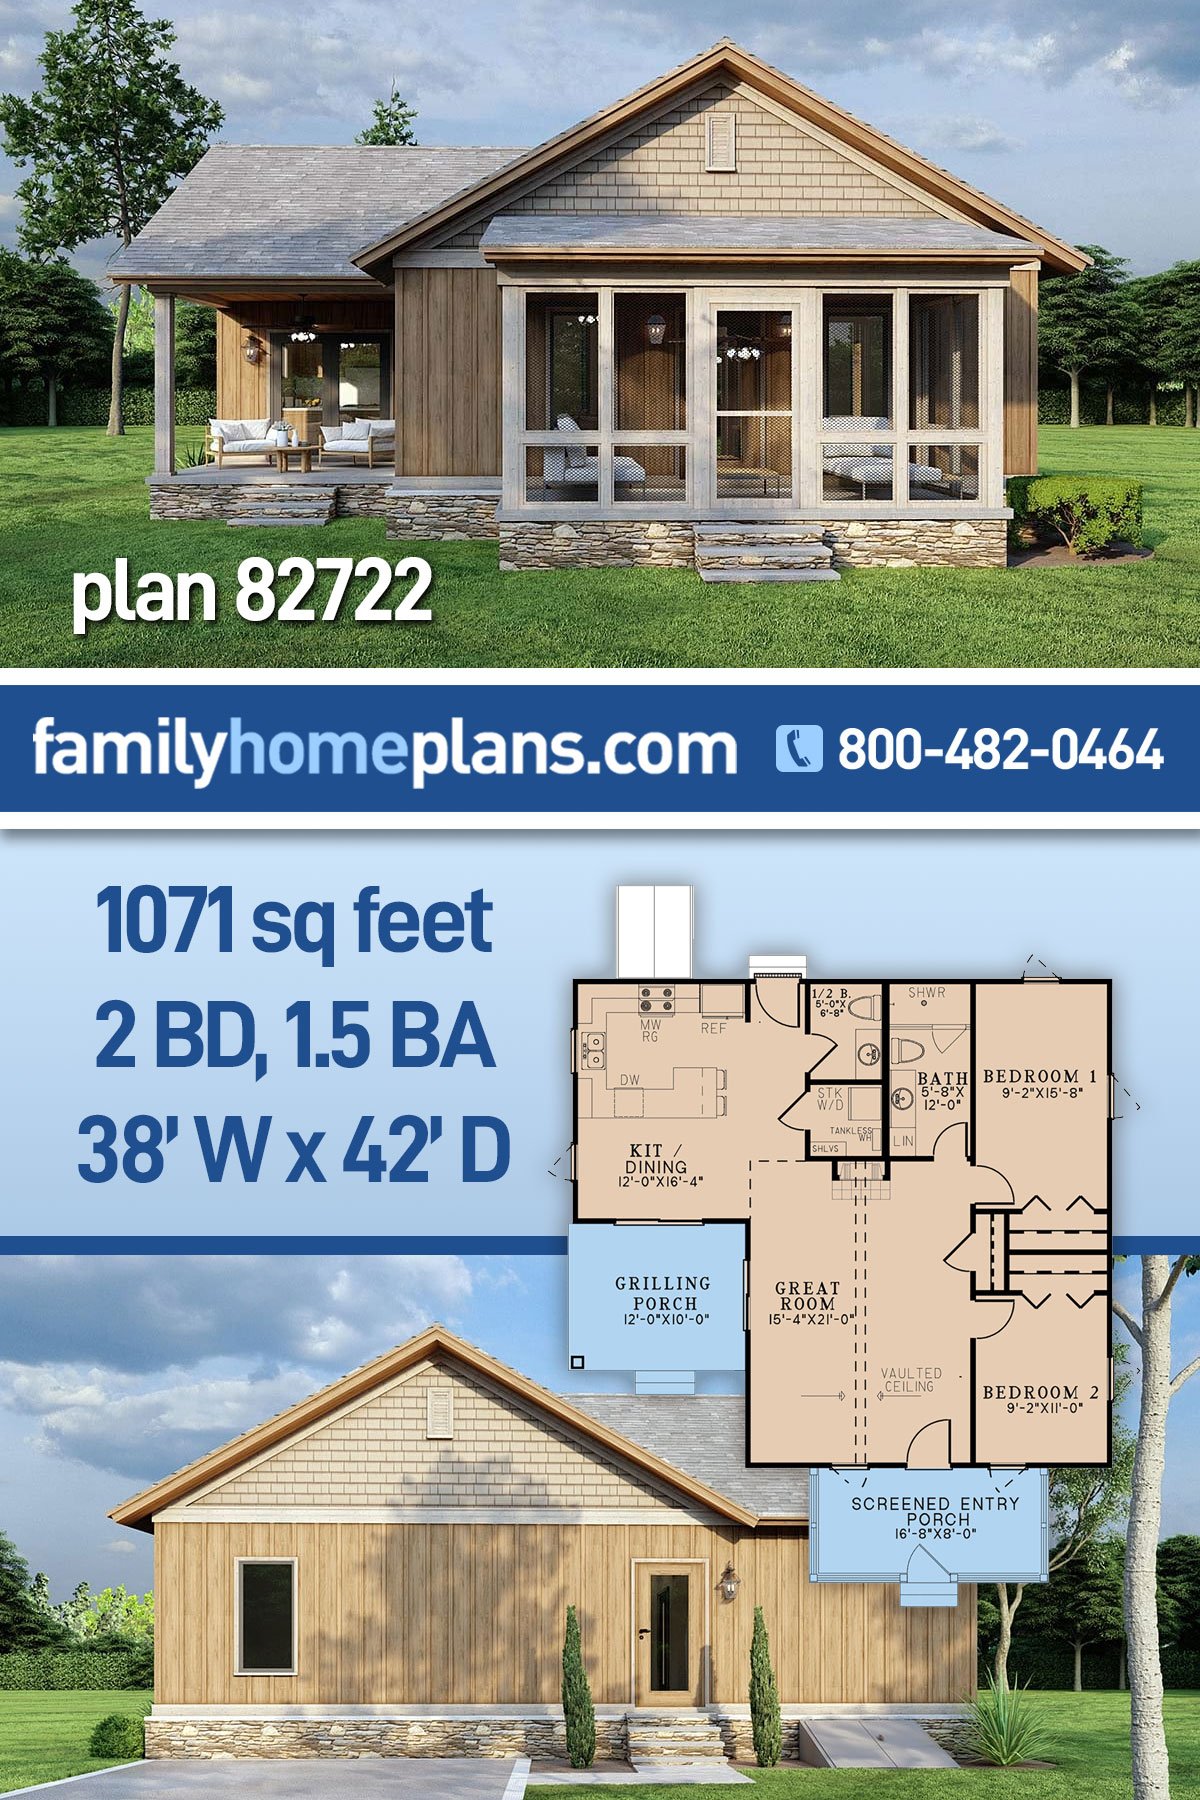 House Plan 82722